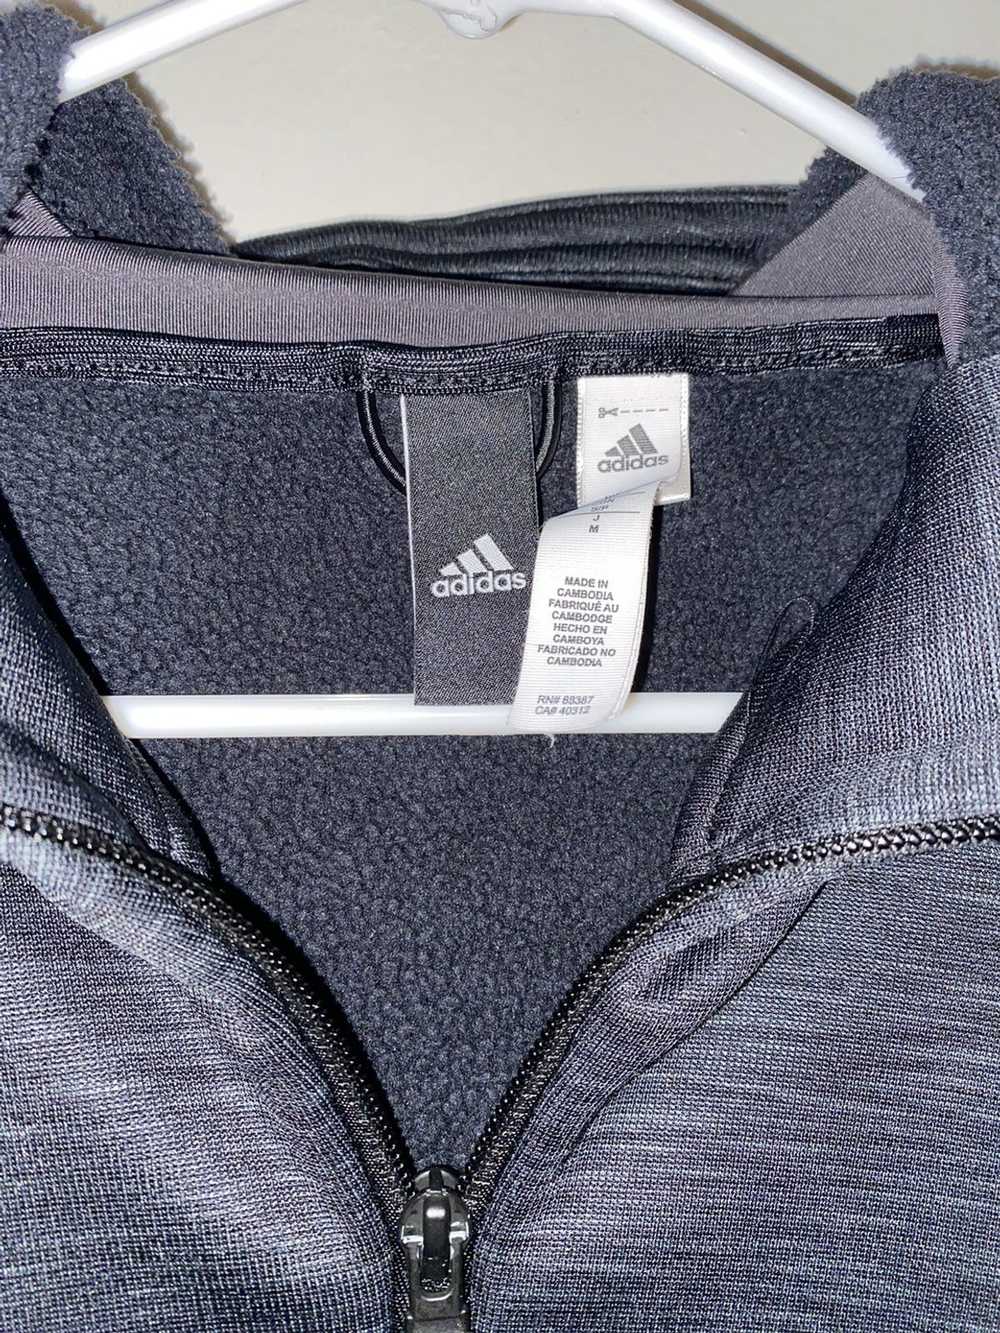 Adidas Adidas zip up climax - image 3